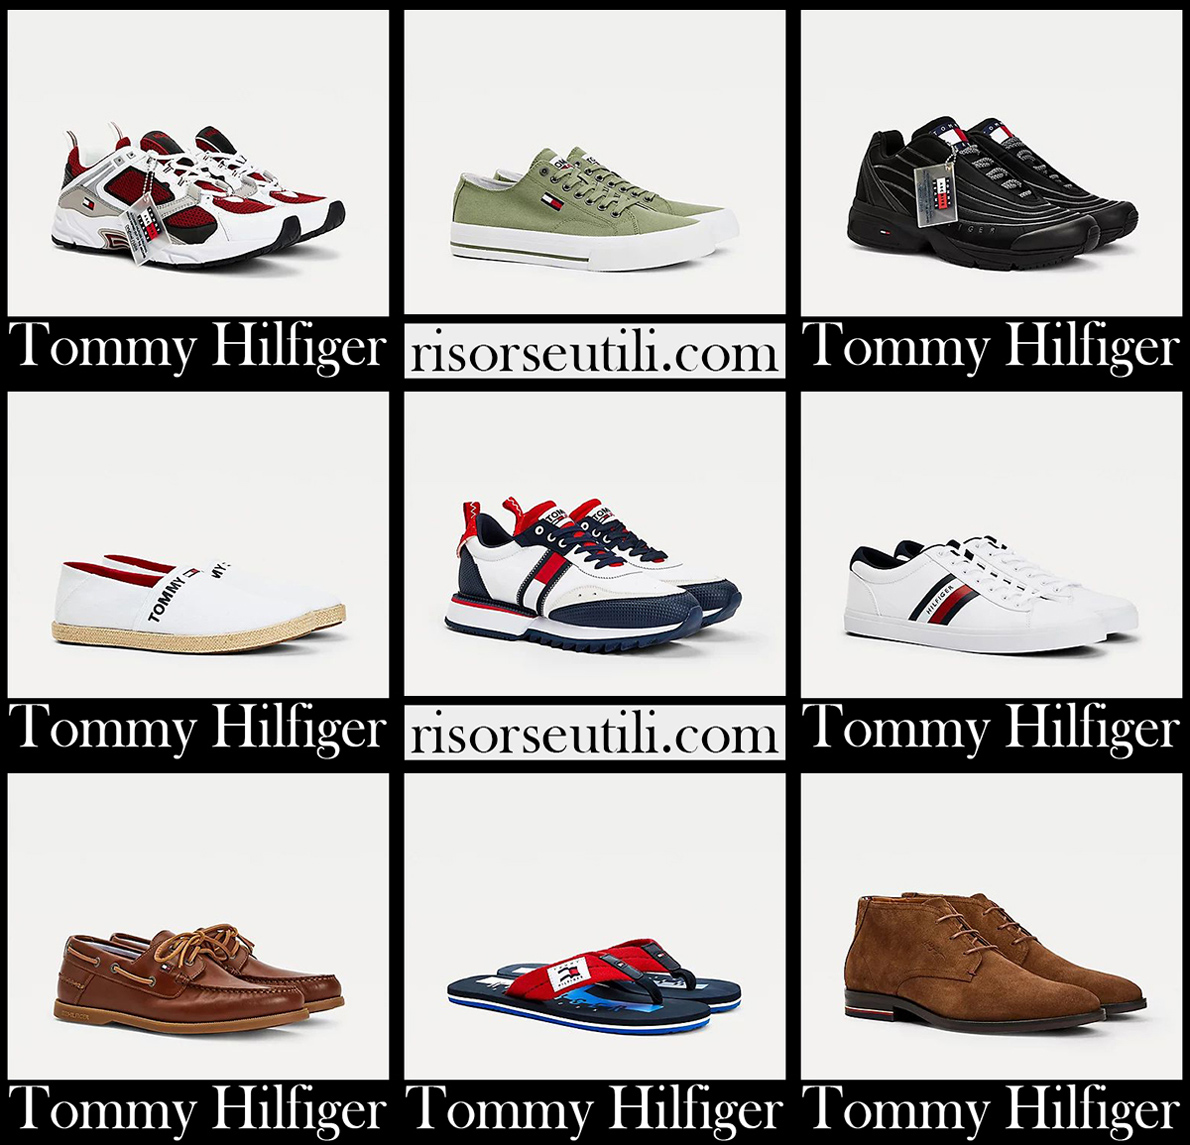 New arrivals Tommy Hilfiger shoes 2021 mens footwear